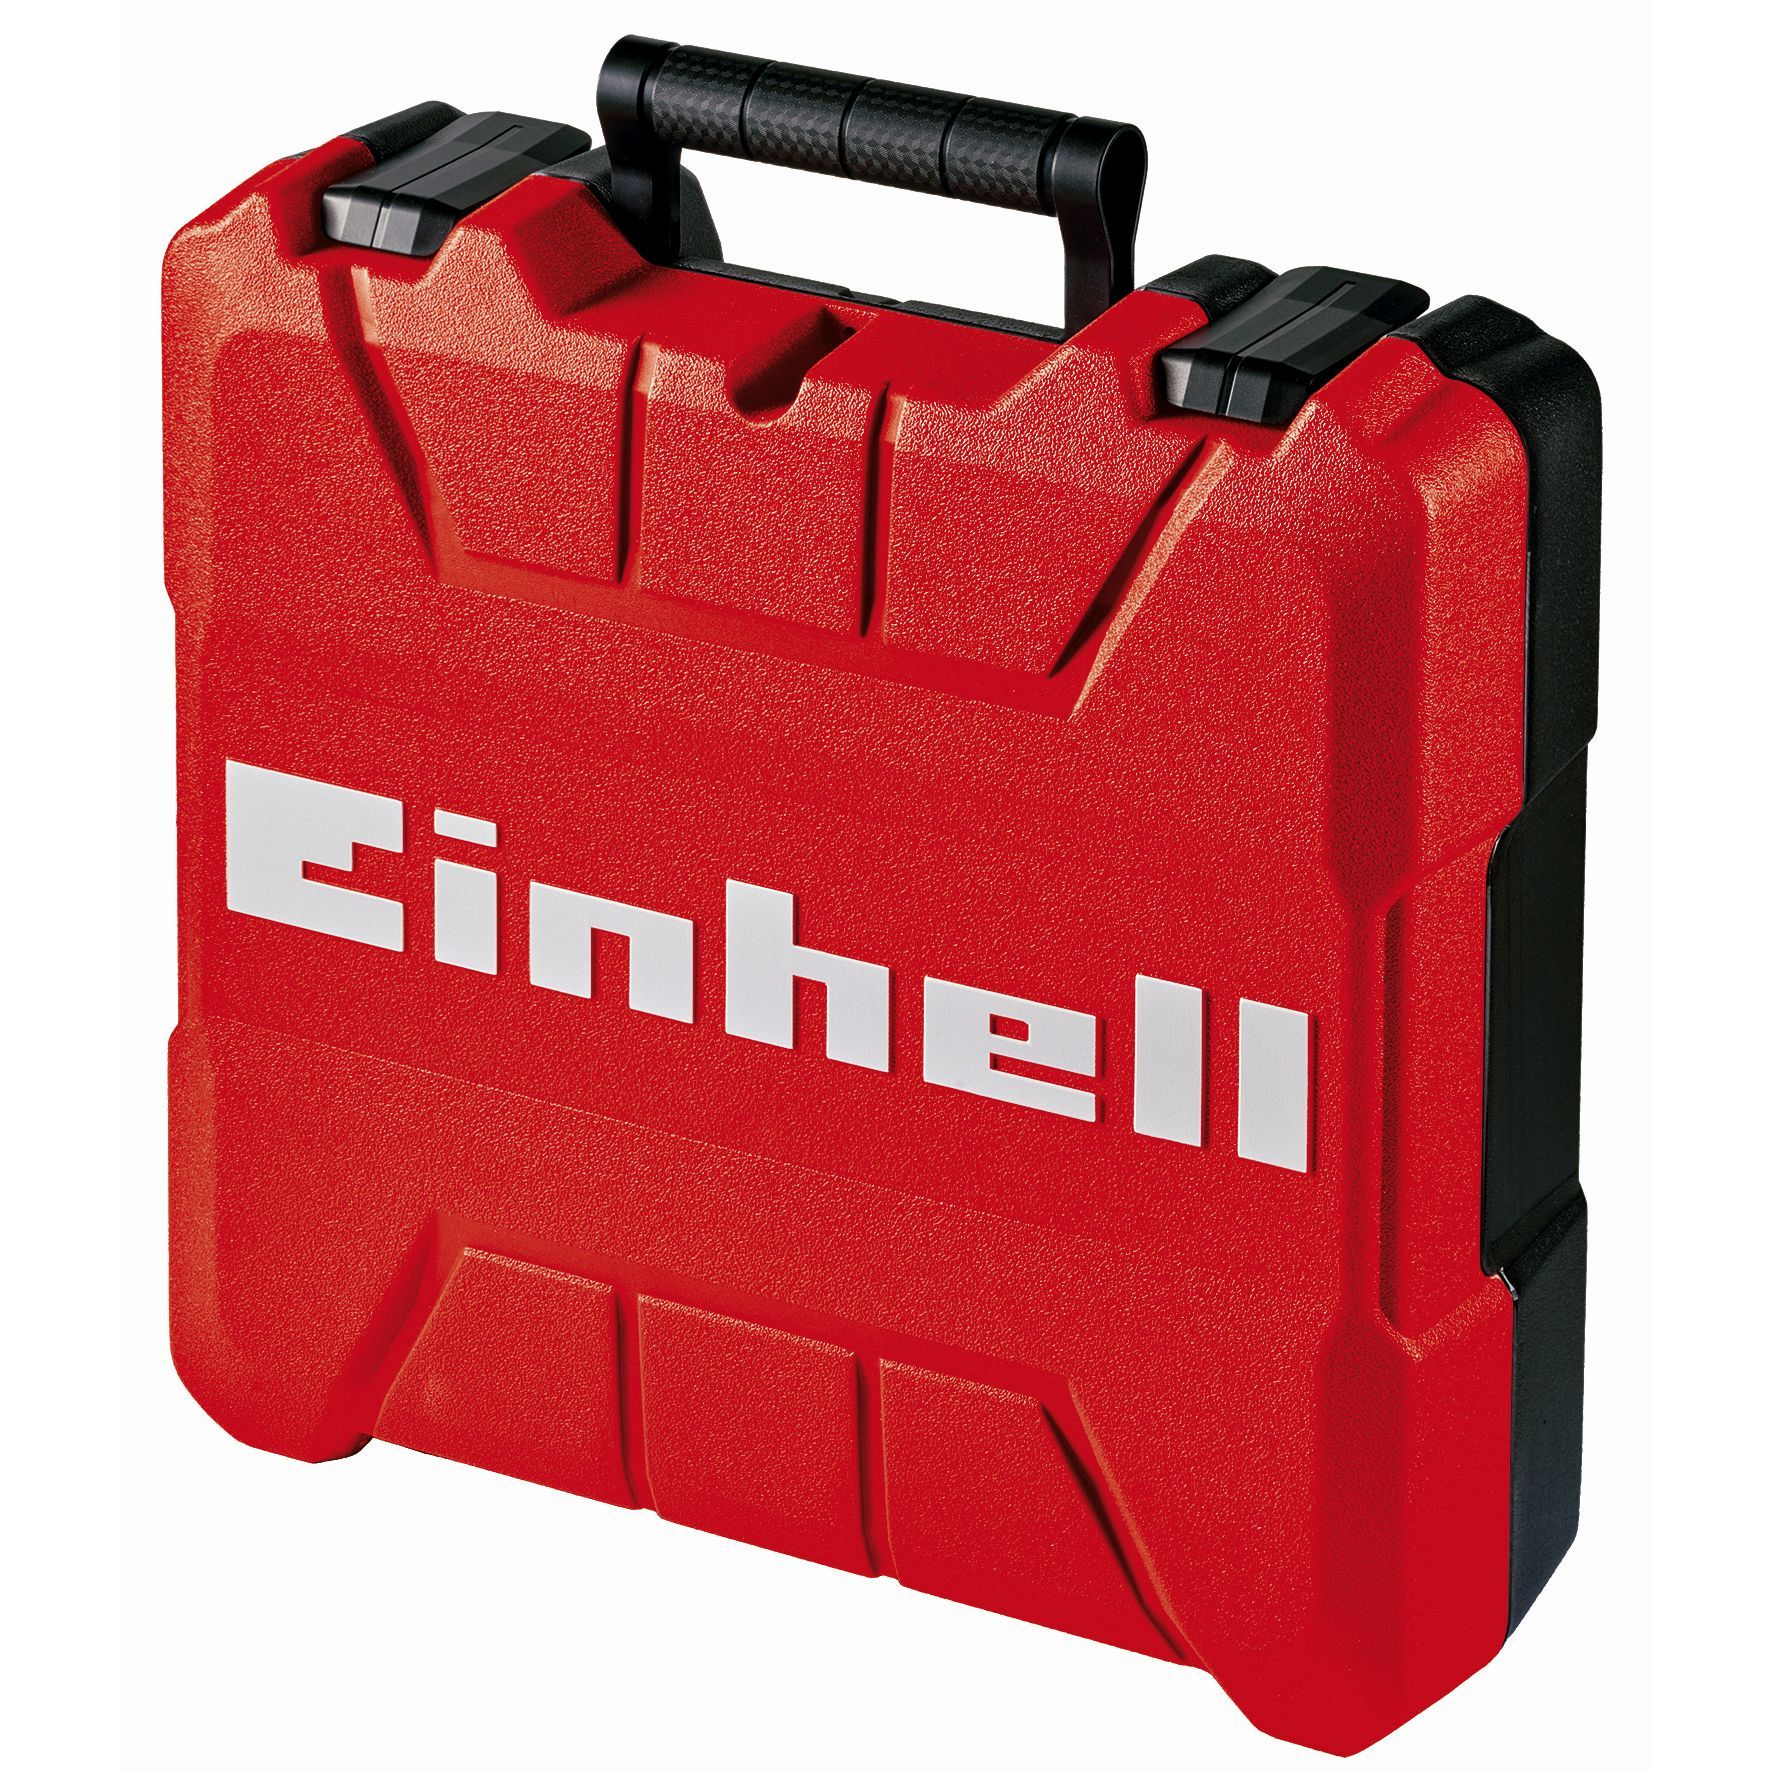 E-Box Koffer, EINHELL Mehrfarbig S35/33